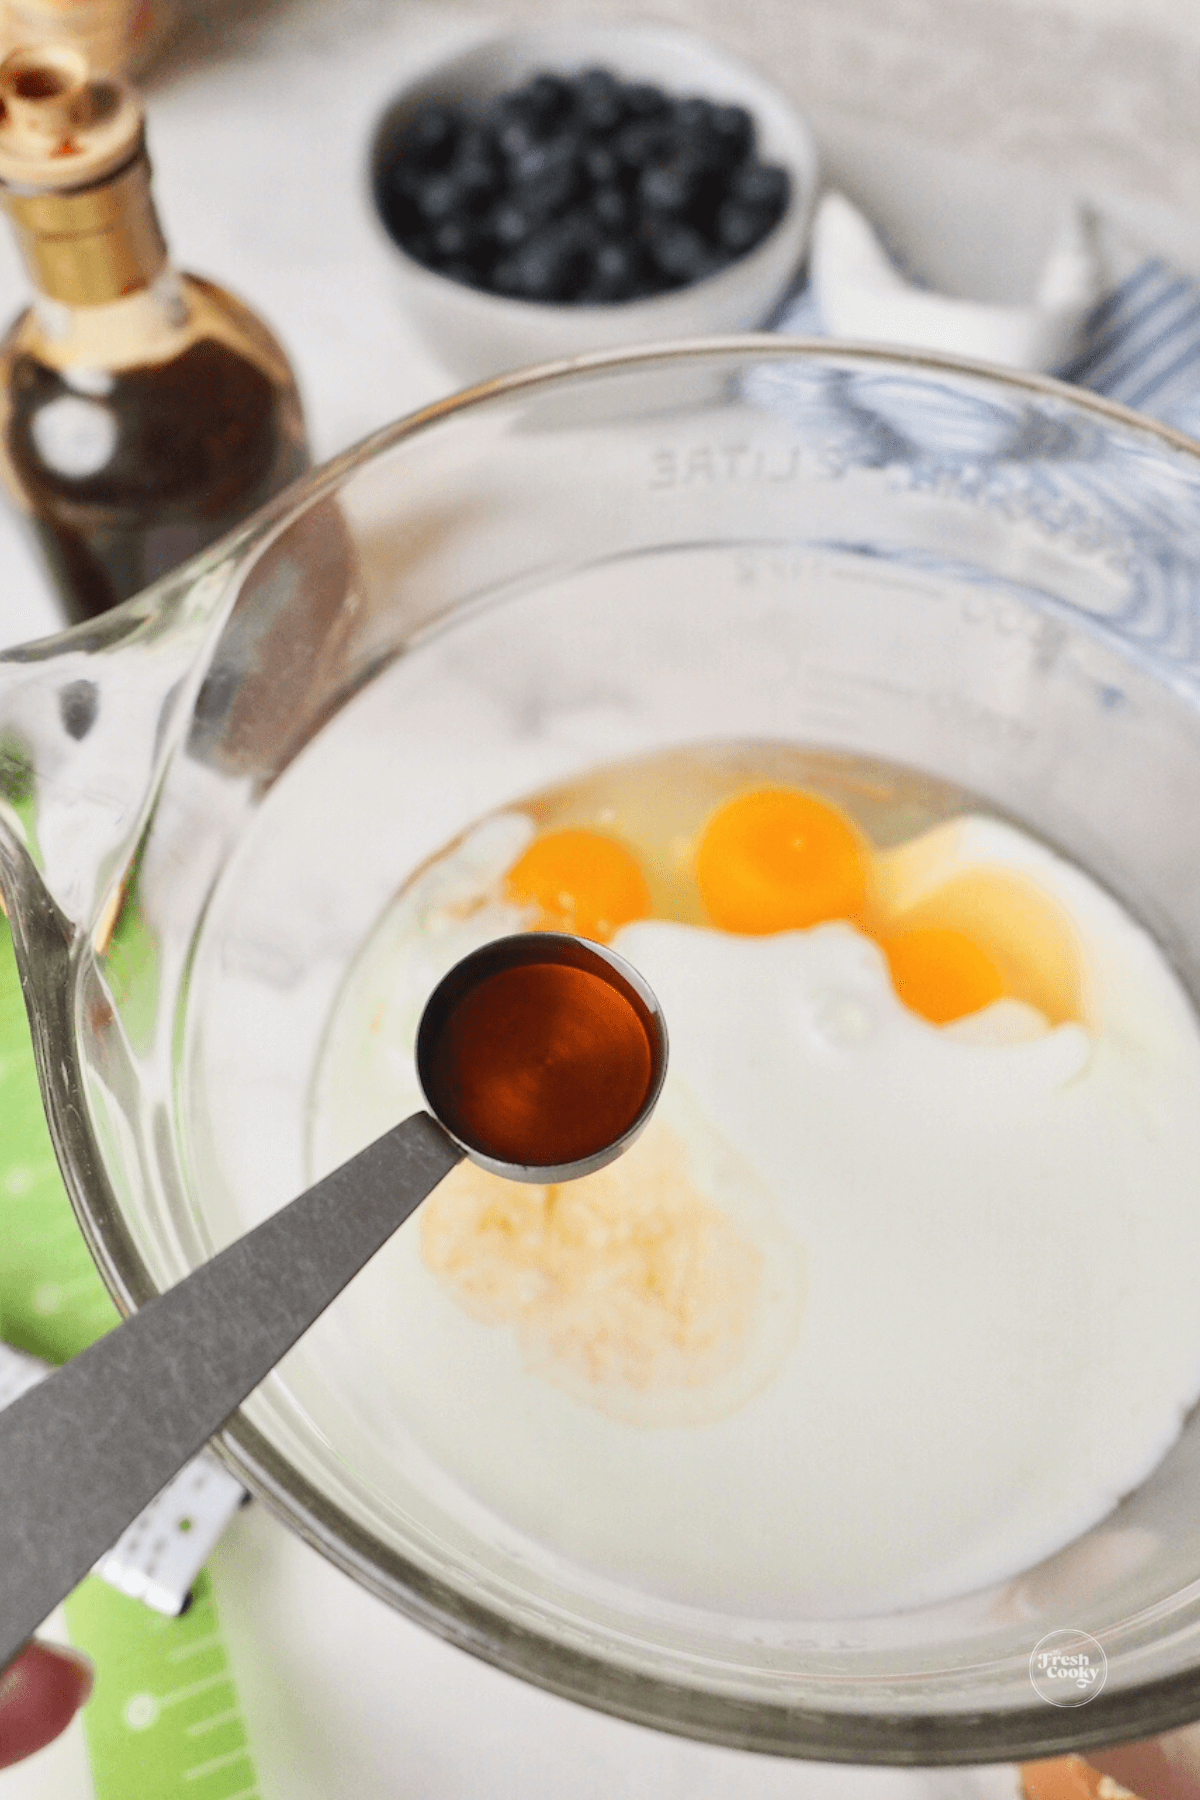 Adding vanilla extract to wet ingredients.